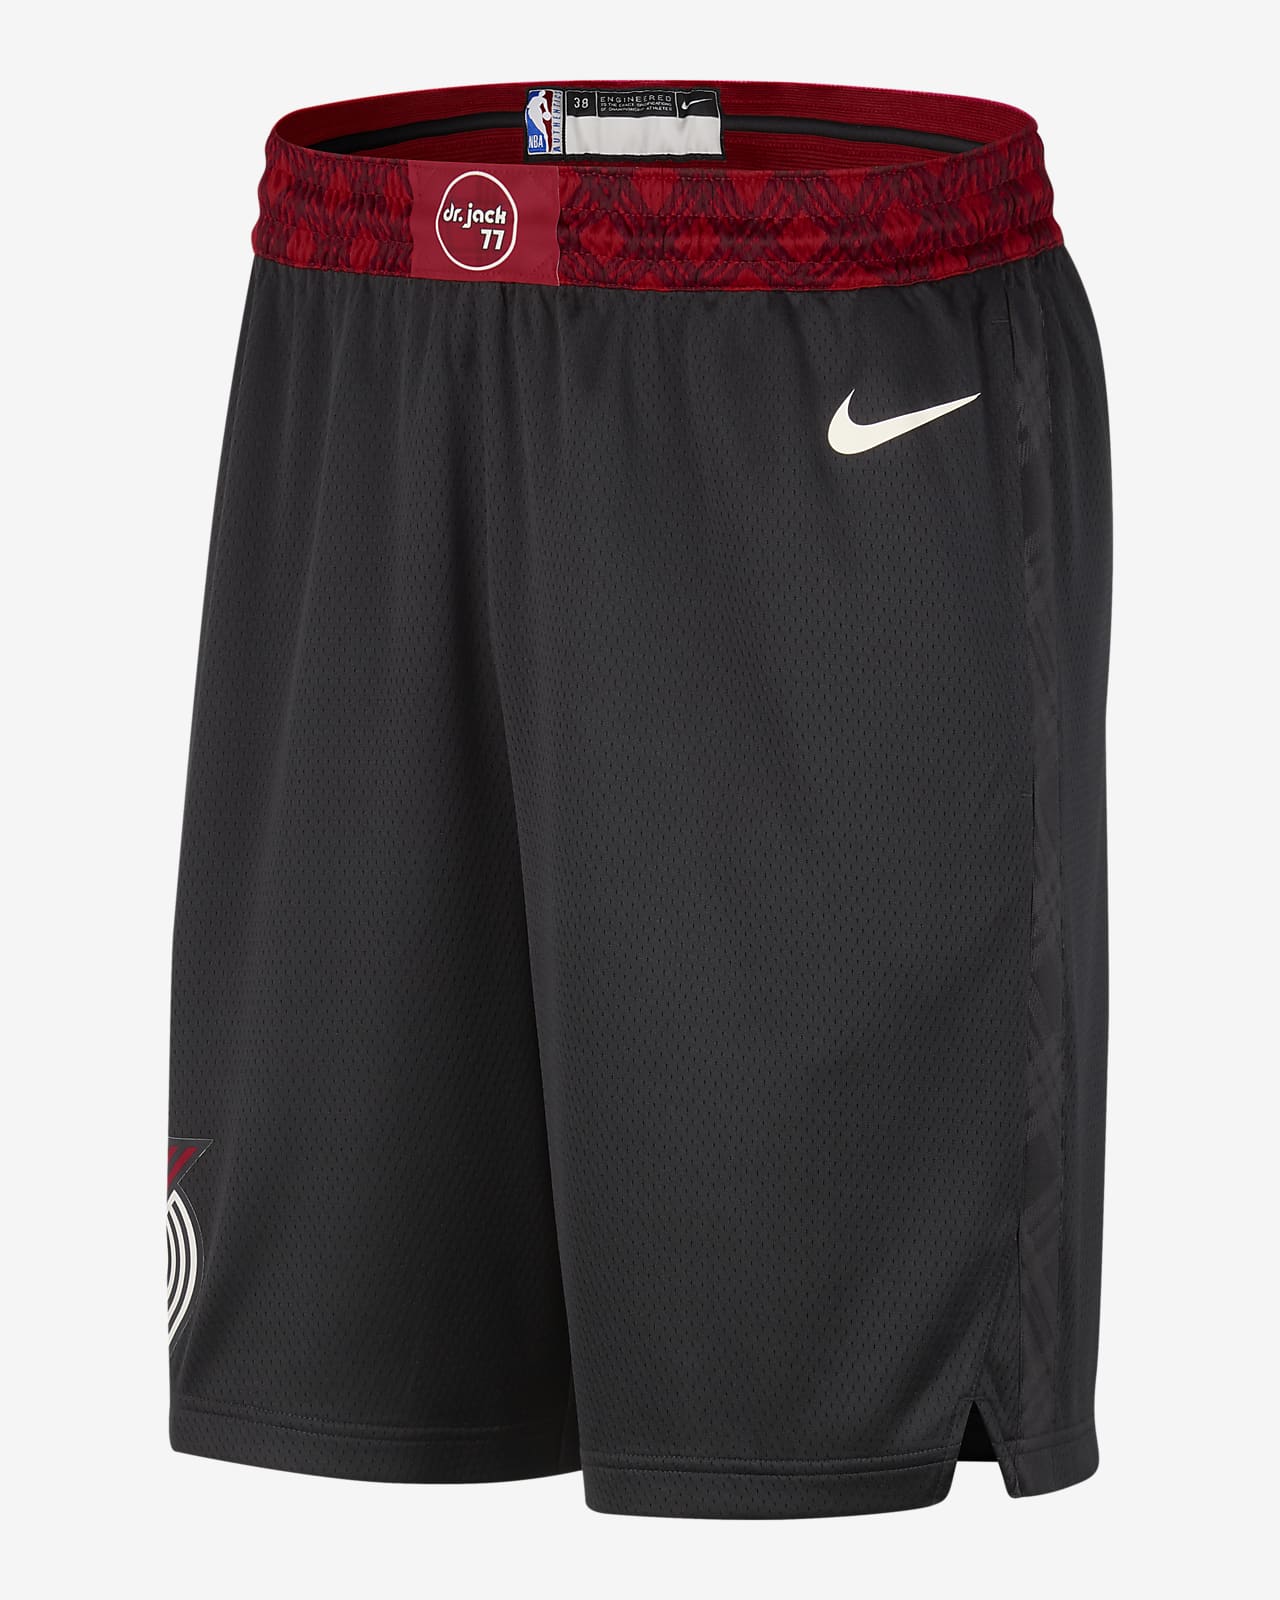 Portland Trail Blazers Men's Nike NBA Shorts.